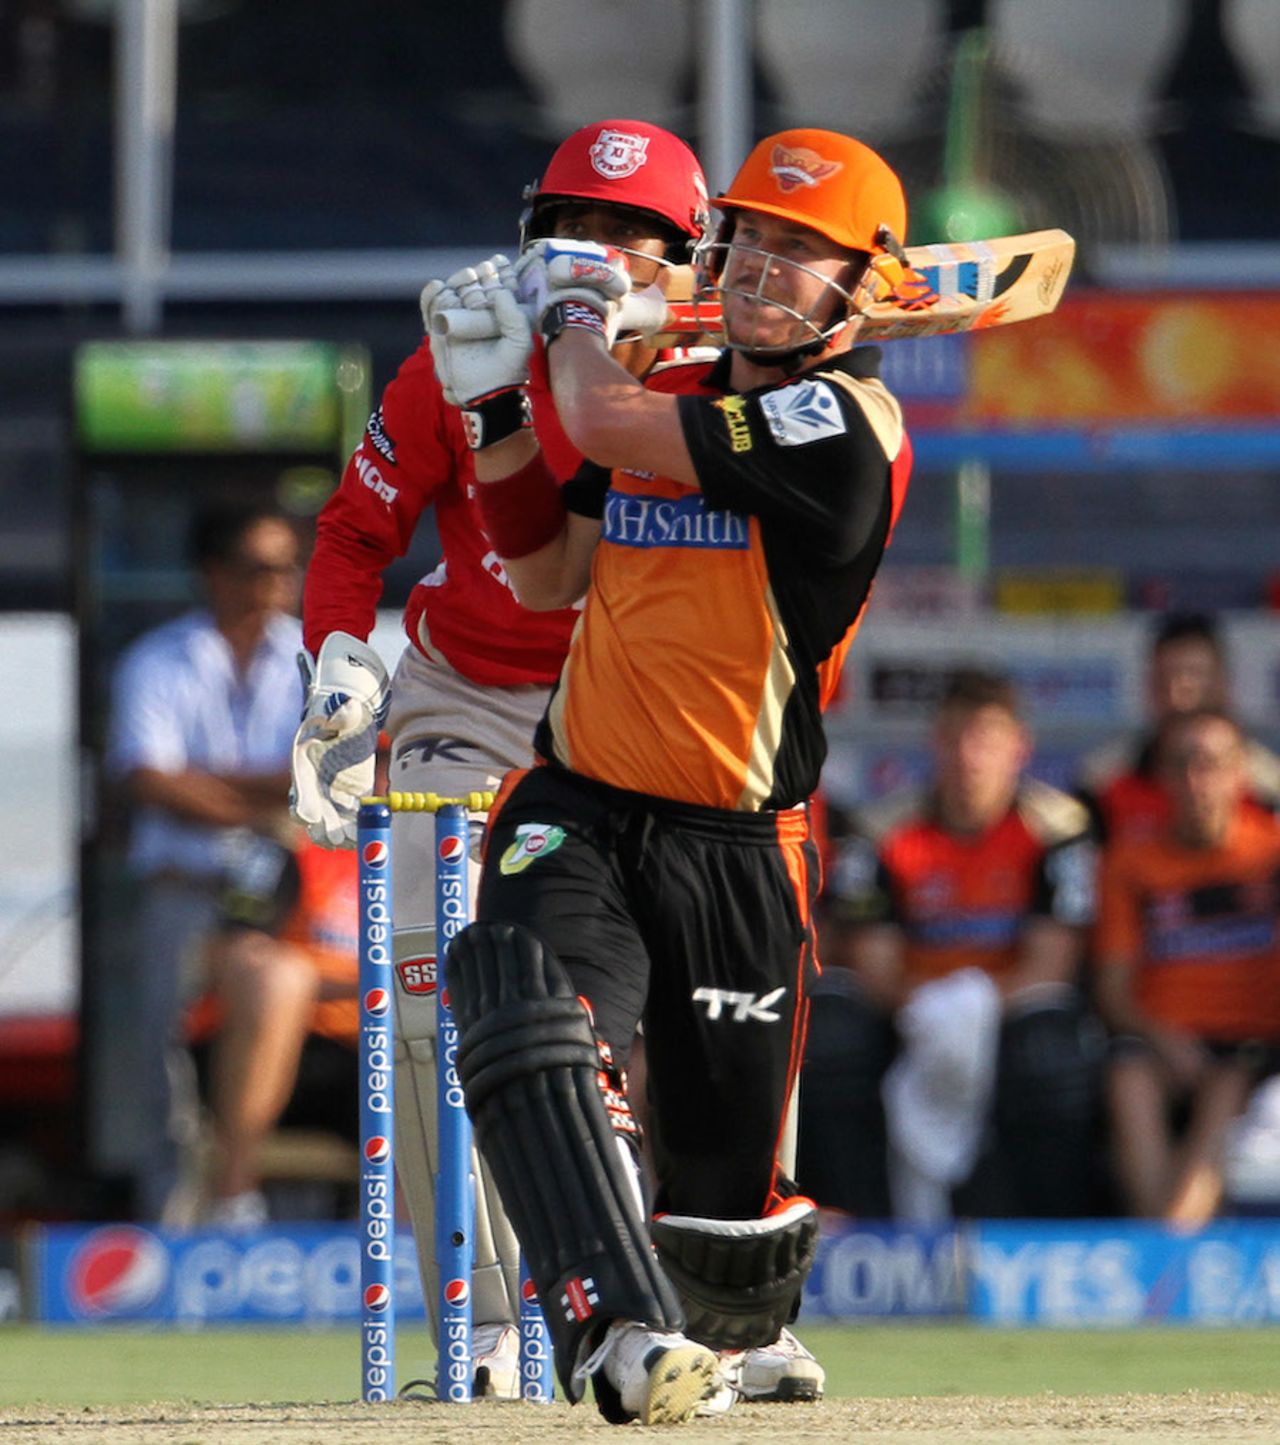 David Warner smacks one across the line, Sunrisers Hyderabad v Kings XI Punjab, IPL 2014, Hyderabad, May 14, 2014